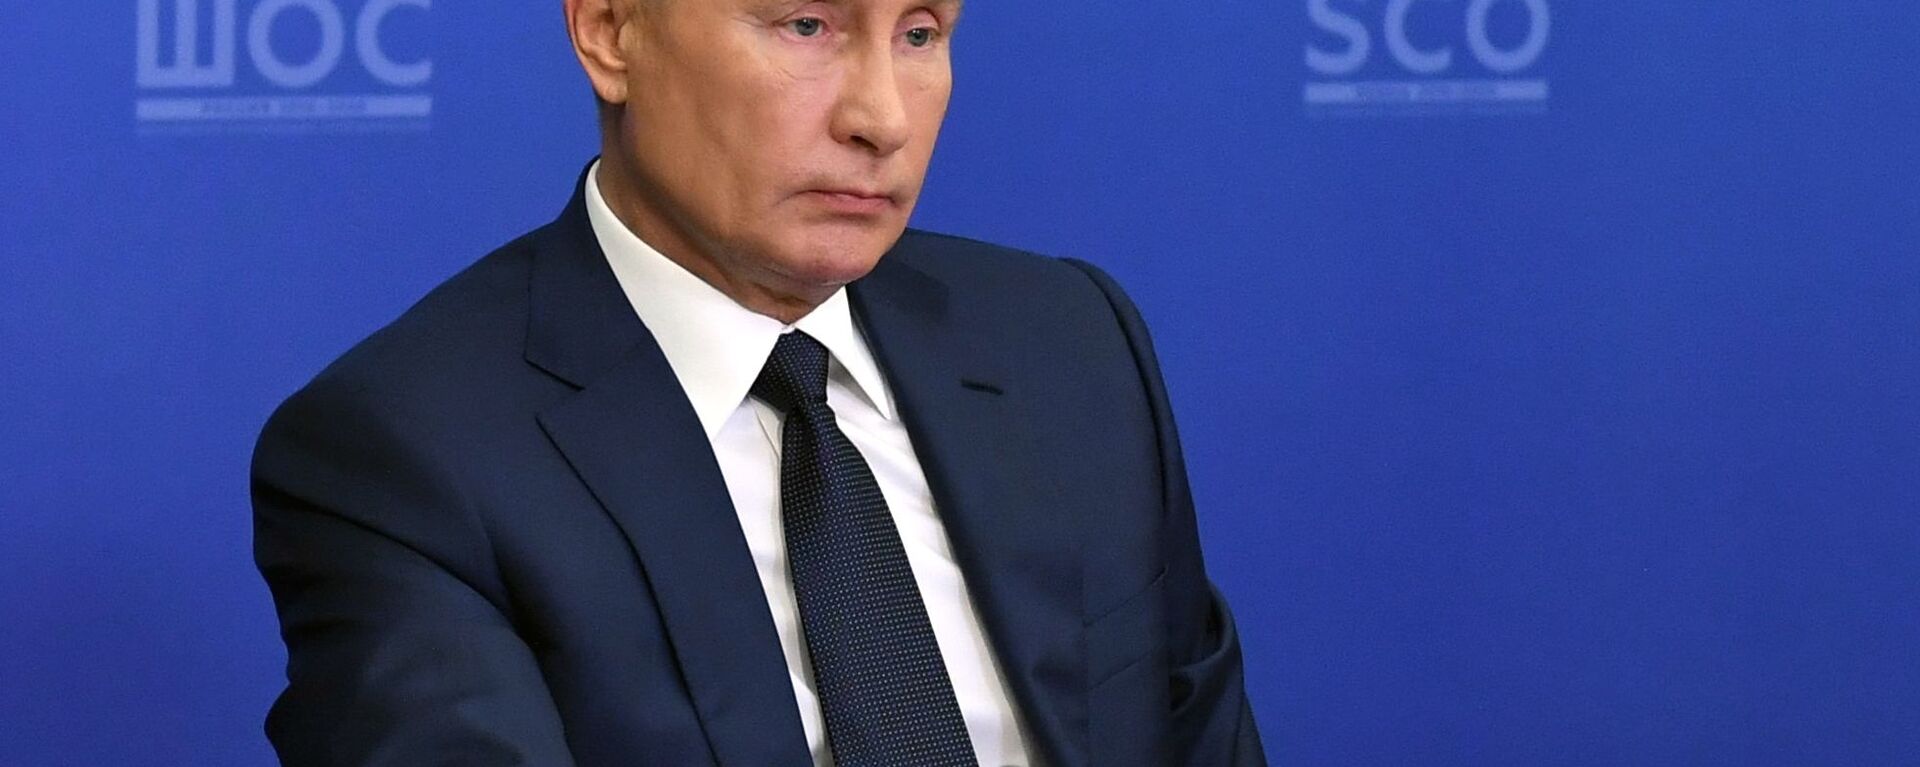 Predsednik Rusije Vladimir Putin - Sputnik Srbija, 1920, 17.09.2021